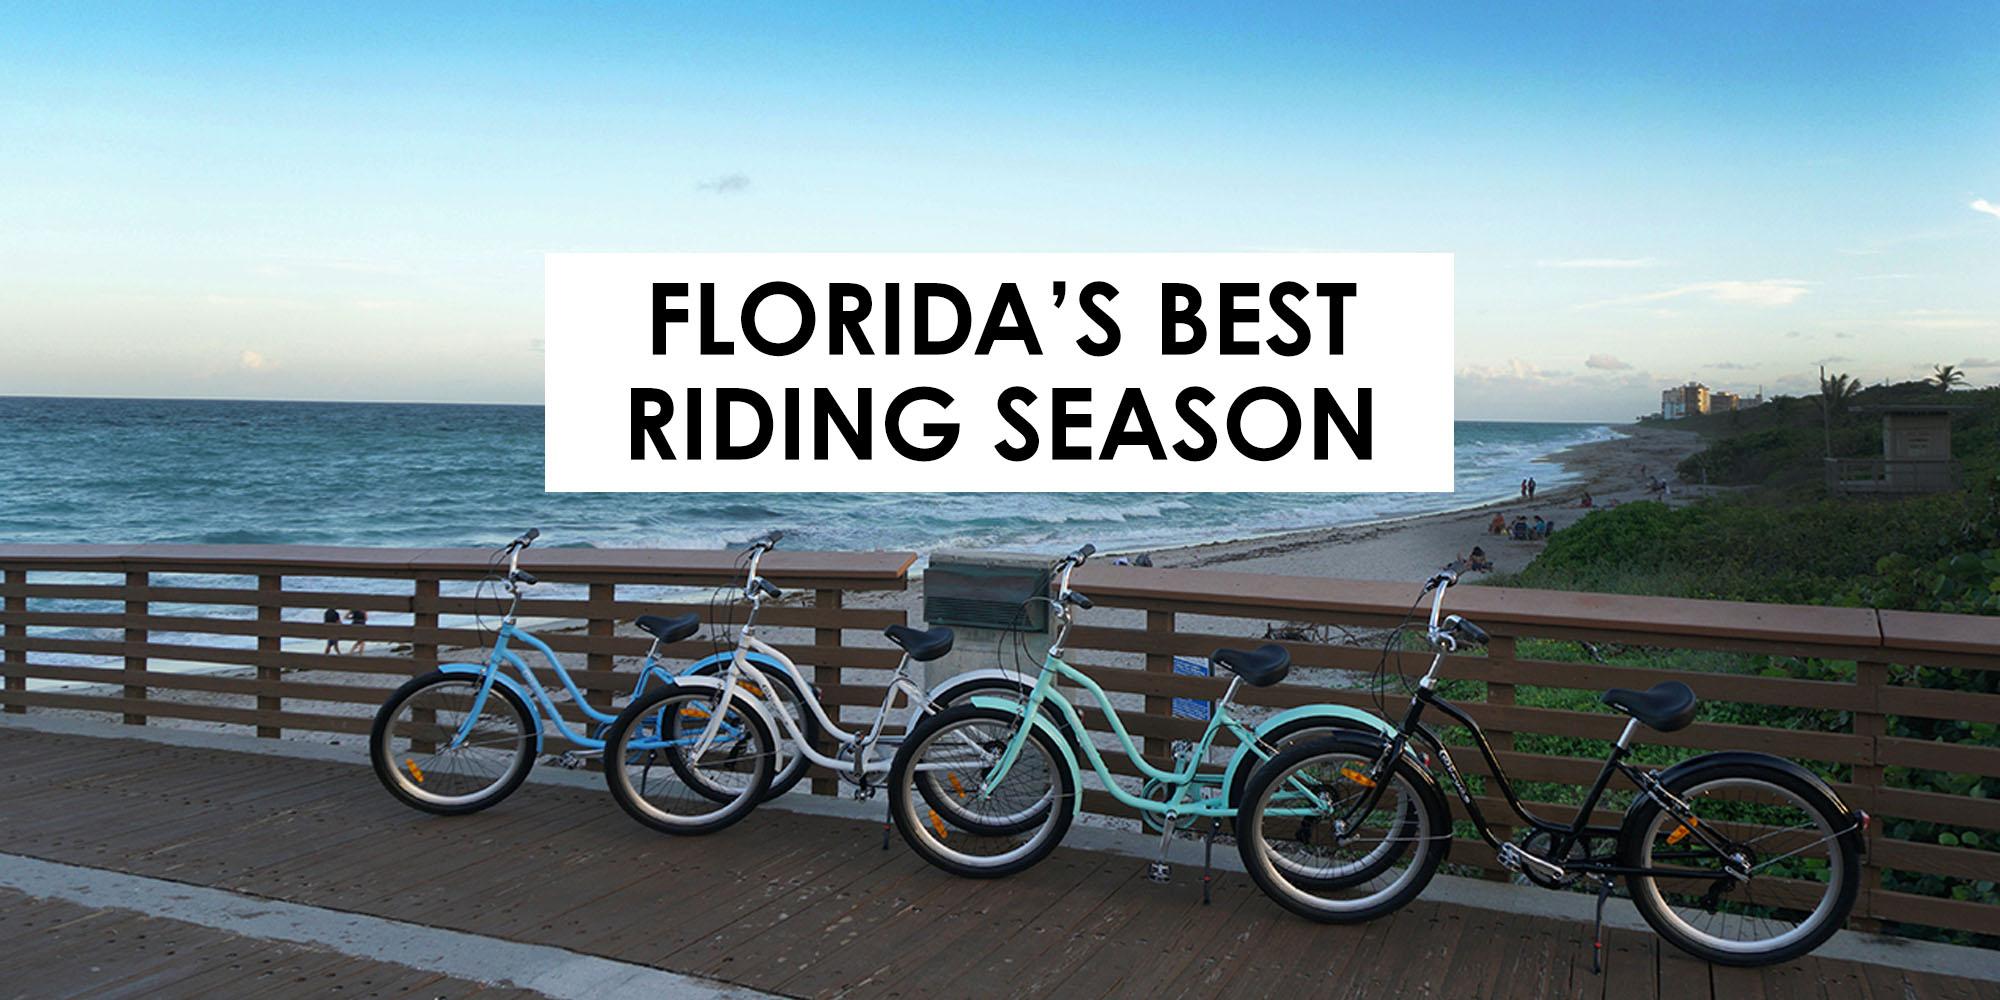 Enjoy Florida's Best Riding Season with Bikes Palm Beach